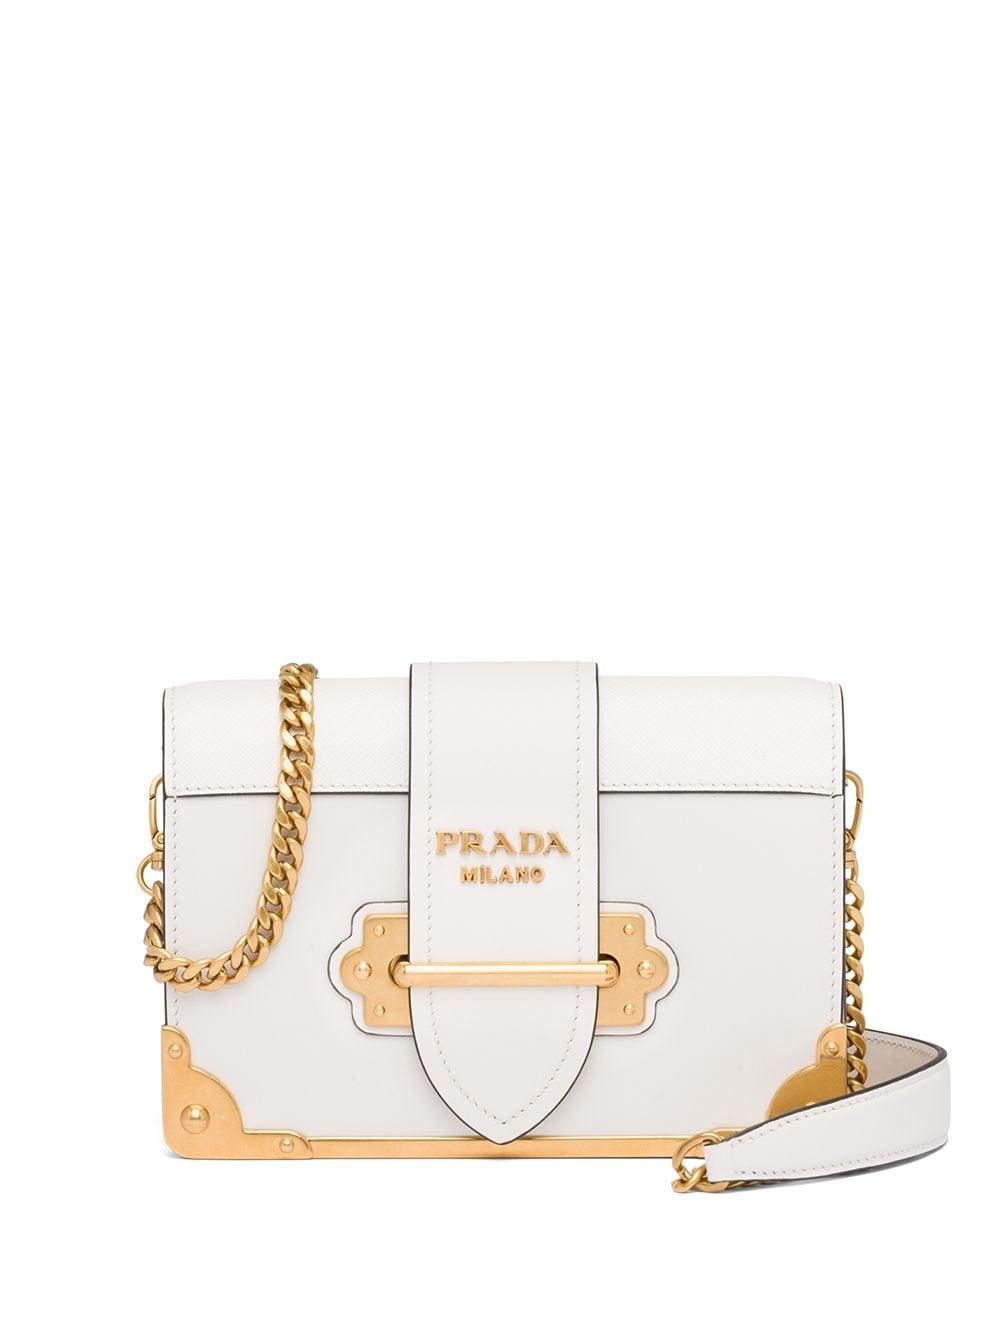 Prada - Cahier Shoulder Bag - Women - Leather - Os - White